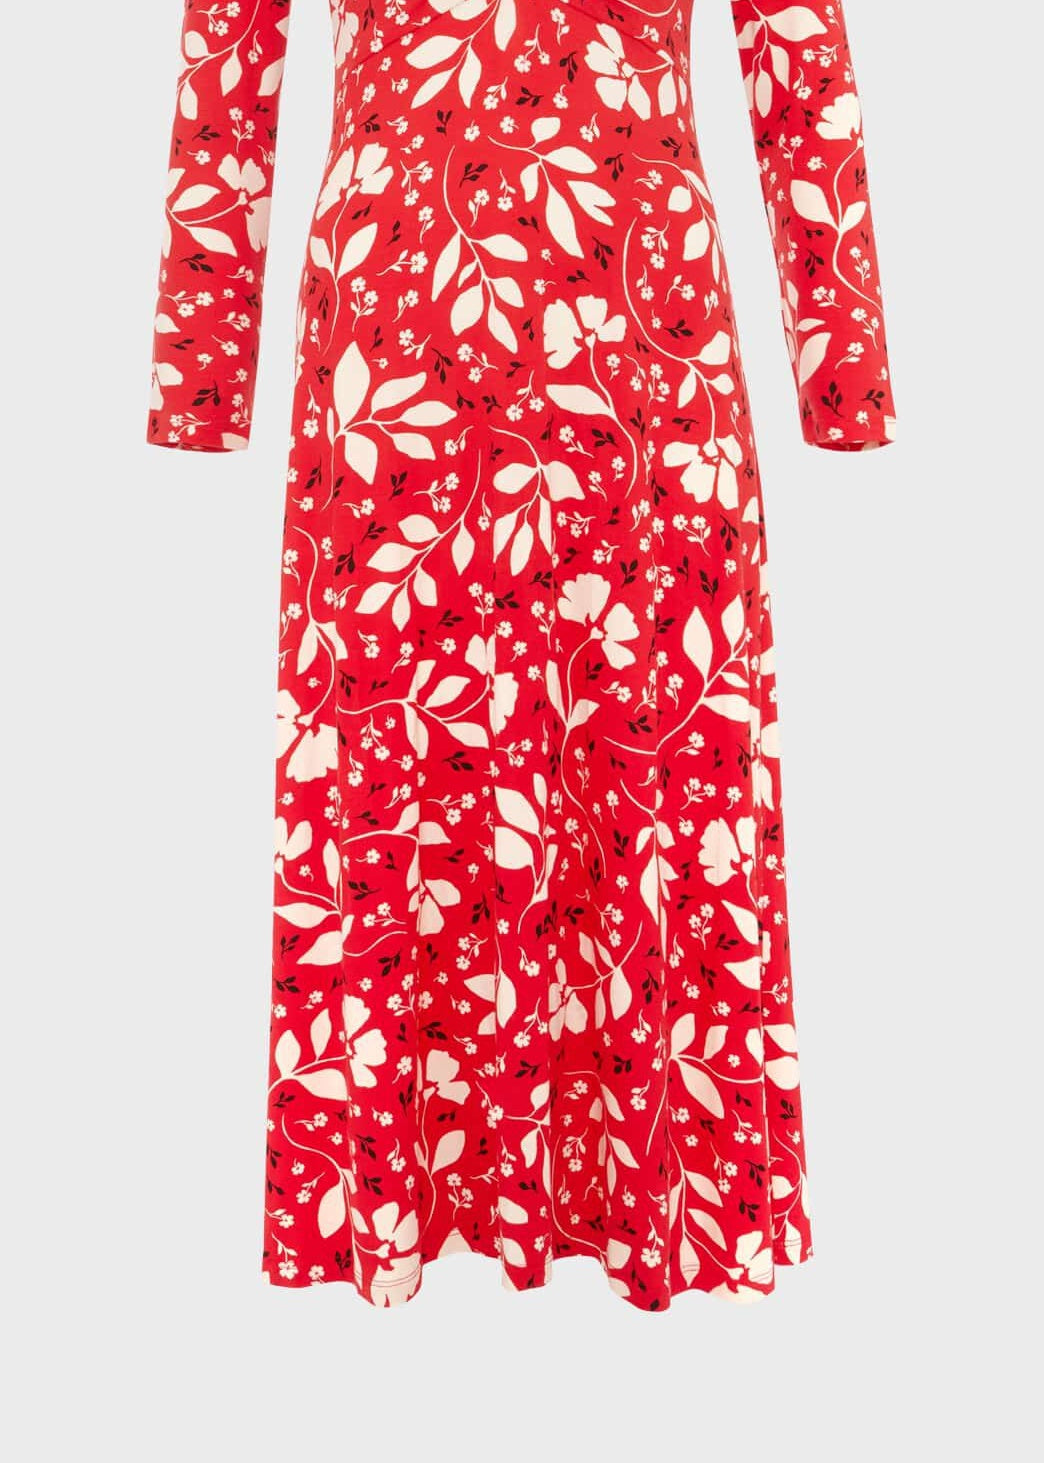 Gabi Jersey Dress 0124/5172/3669l00 Red-Multi